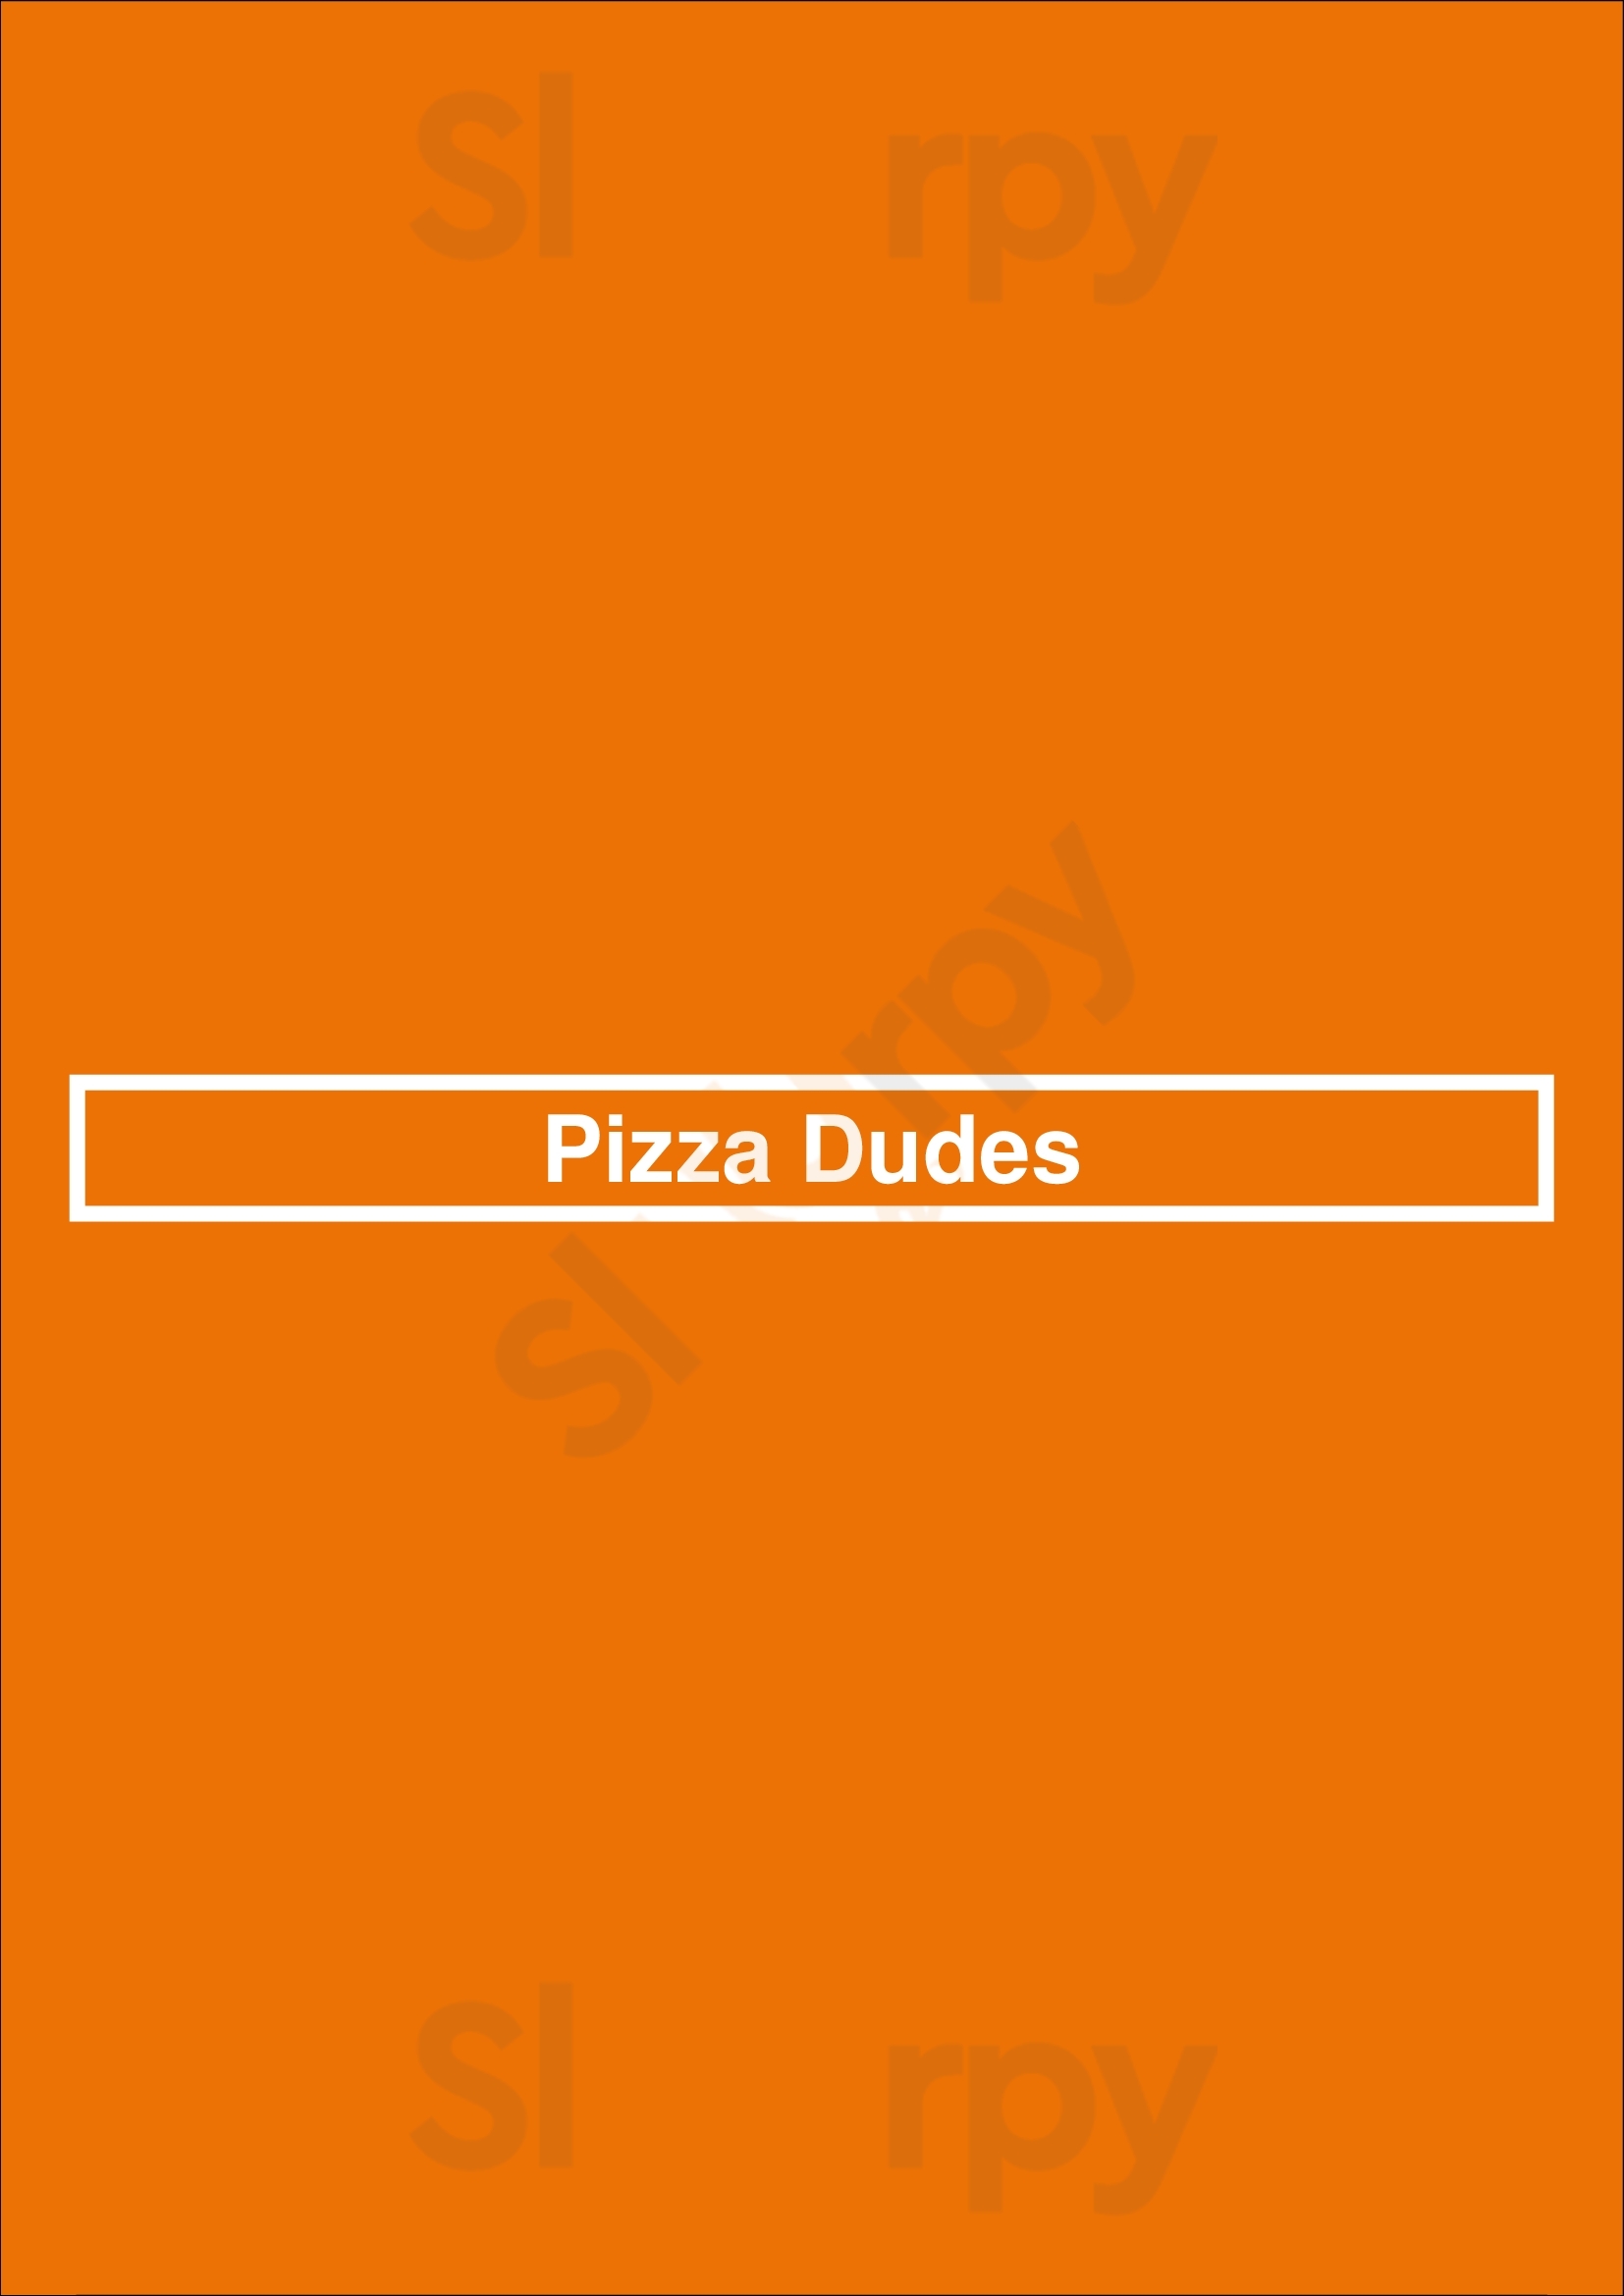 Pizza Dudes Renton Menu - 1